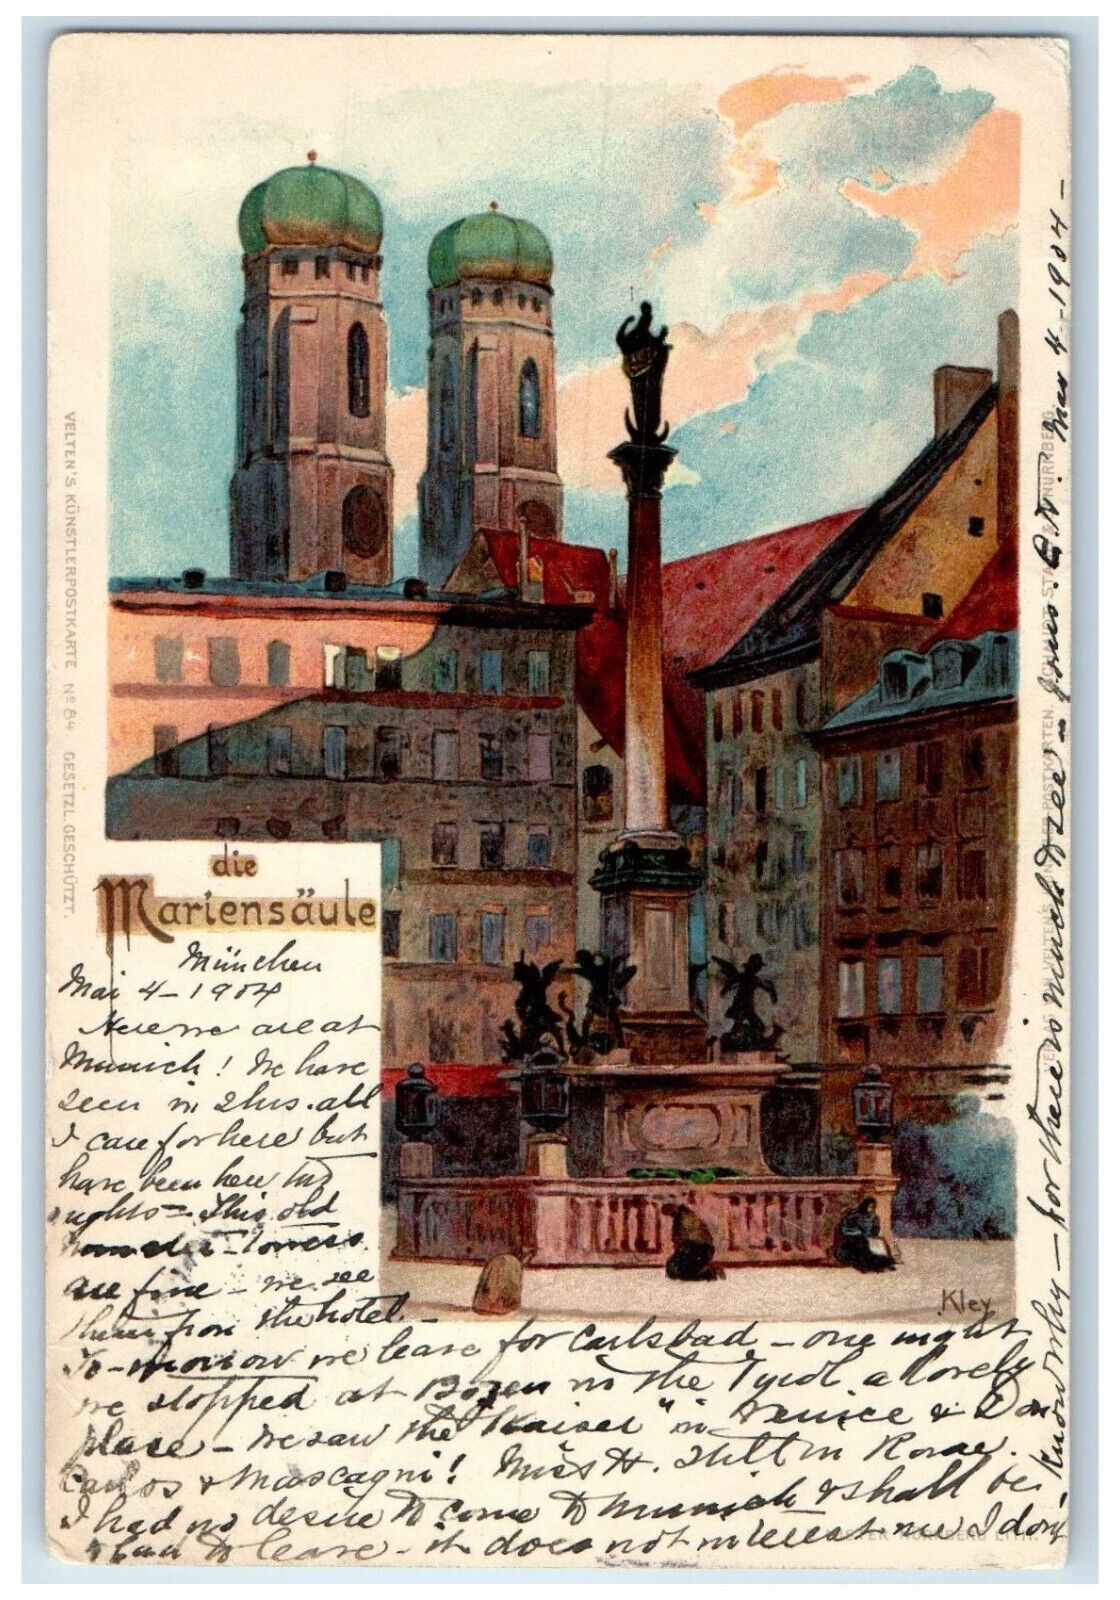 1904 Building View Die Mariensaule Munich Germany Posted Antique Postcard